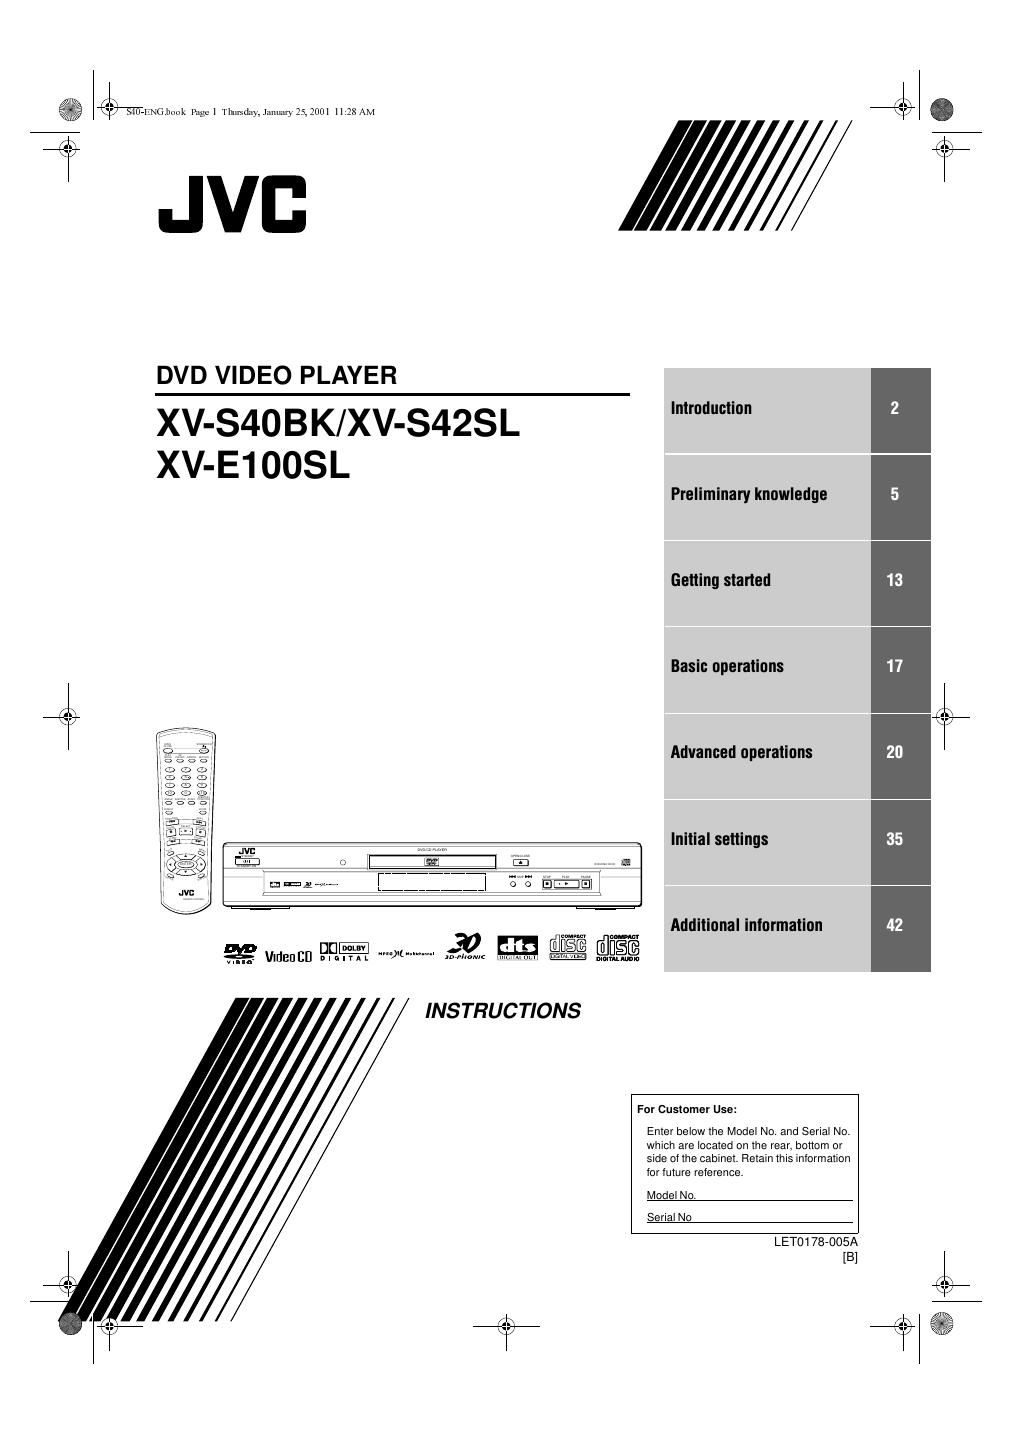 Jvc XVE 100 SL Owners Manual